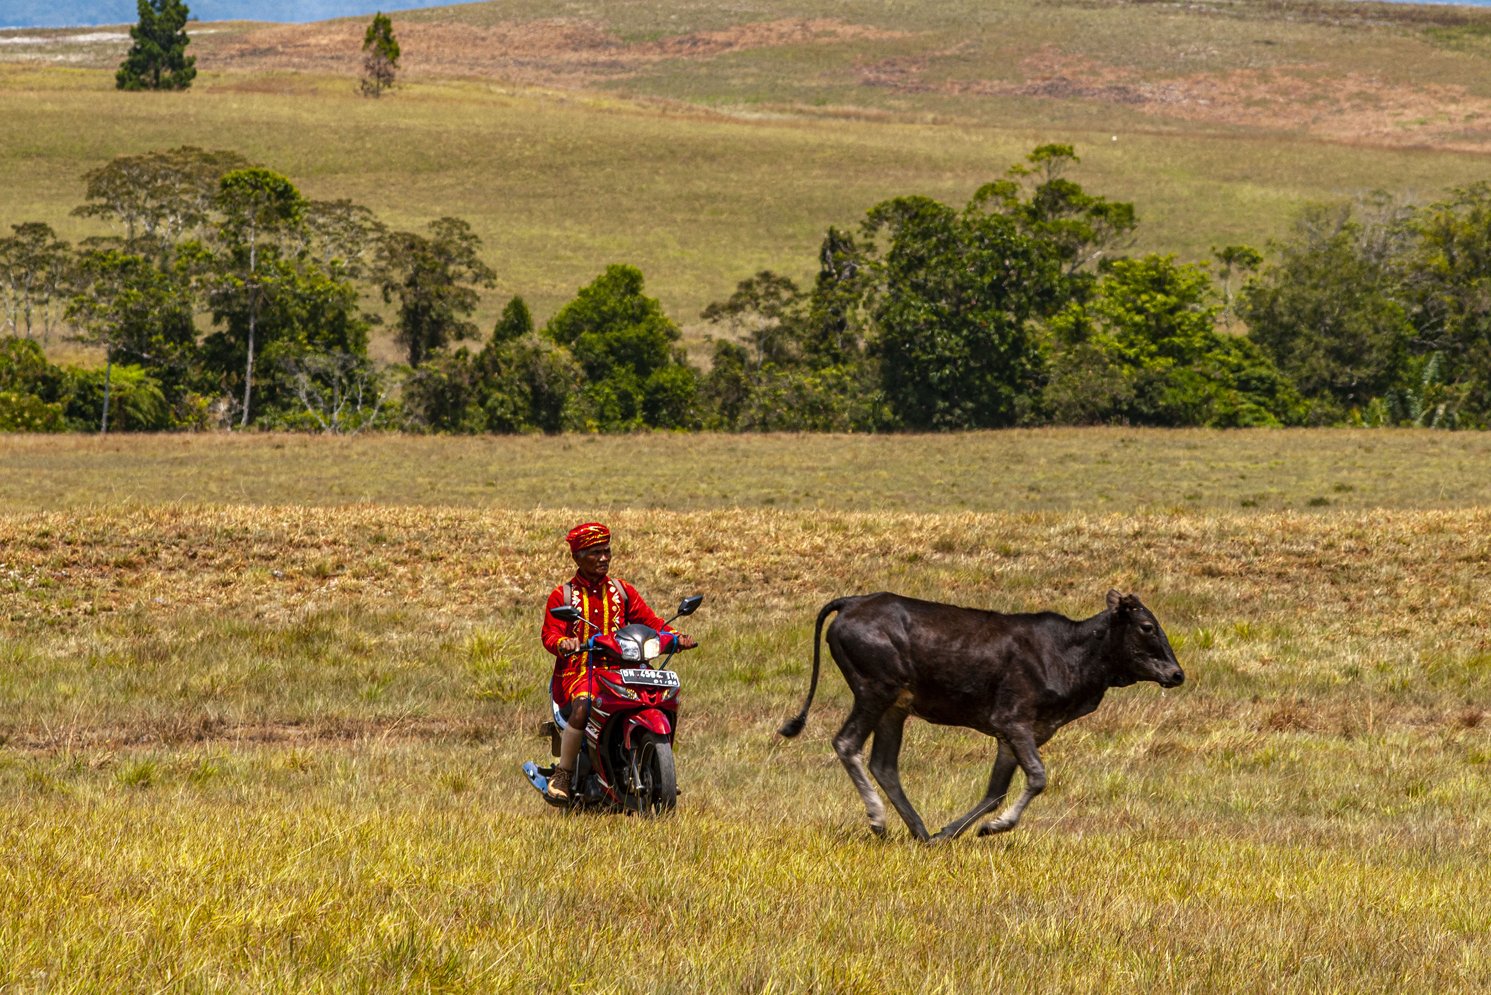 Pengelola peternakan menggembala hewan ternaknya sambil mengendarai sepeda motor di peternakan leluhur di Desa Winowanga, Lore Timur, Poso, Sulawesi Tengah.